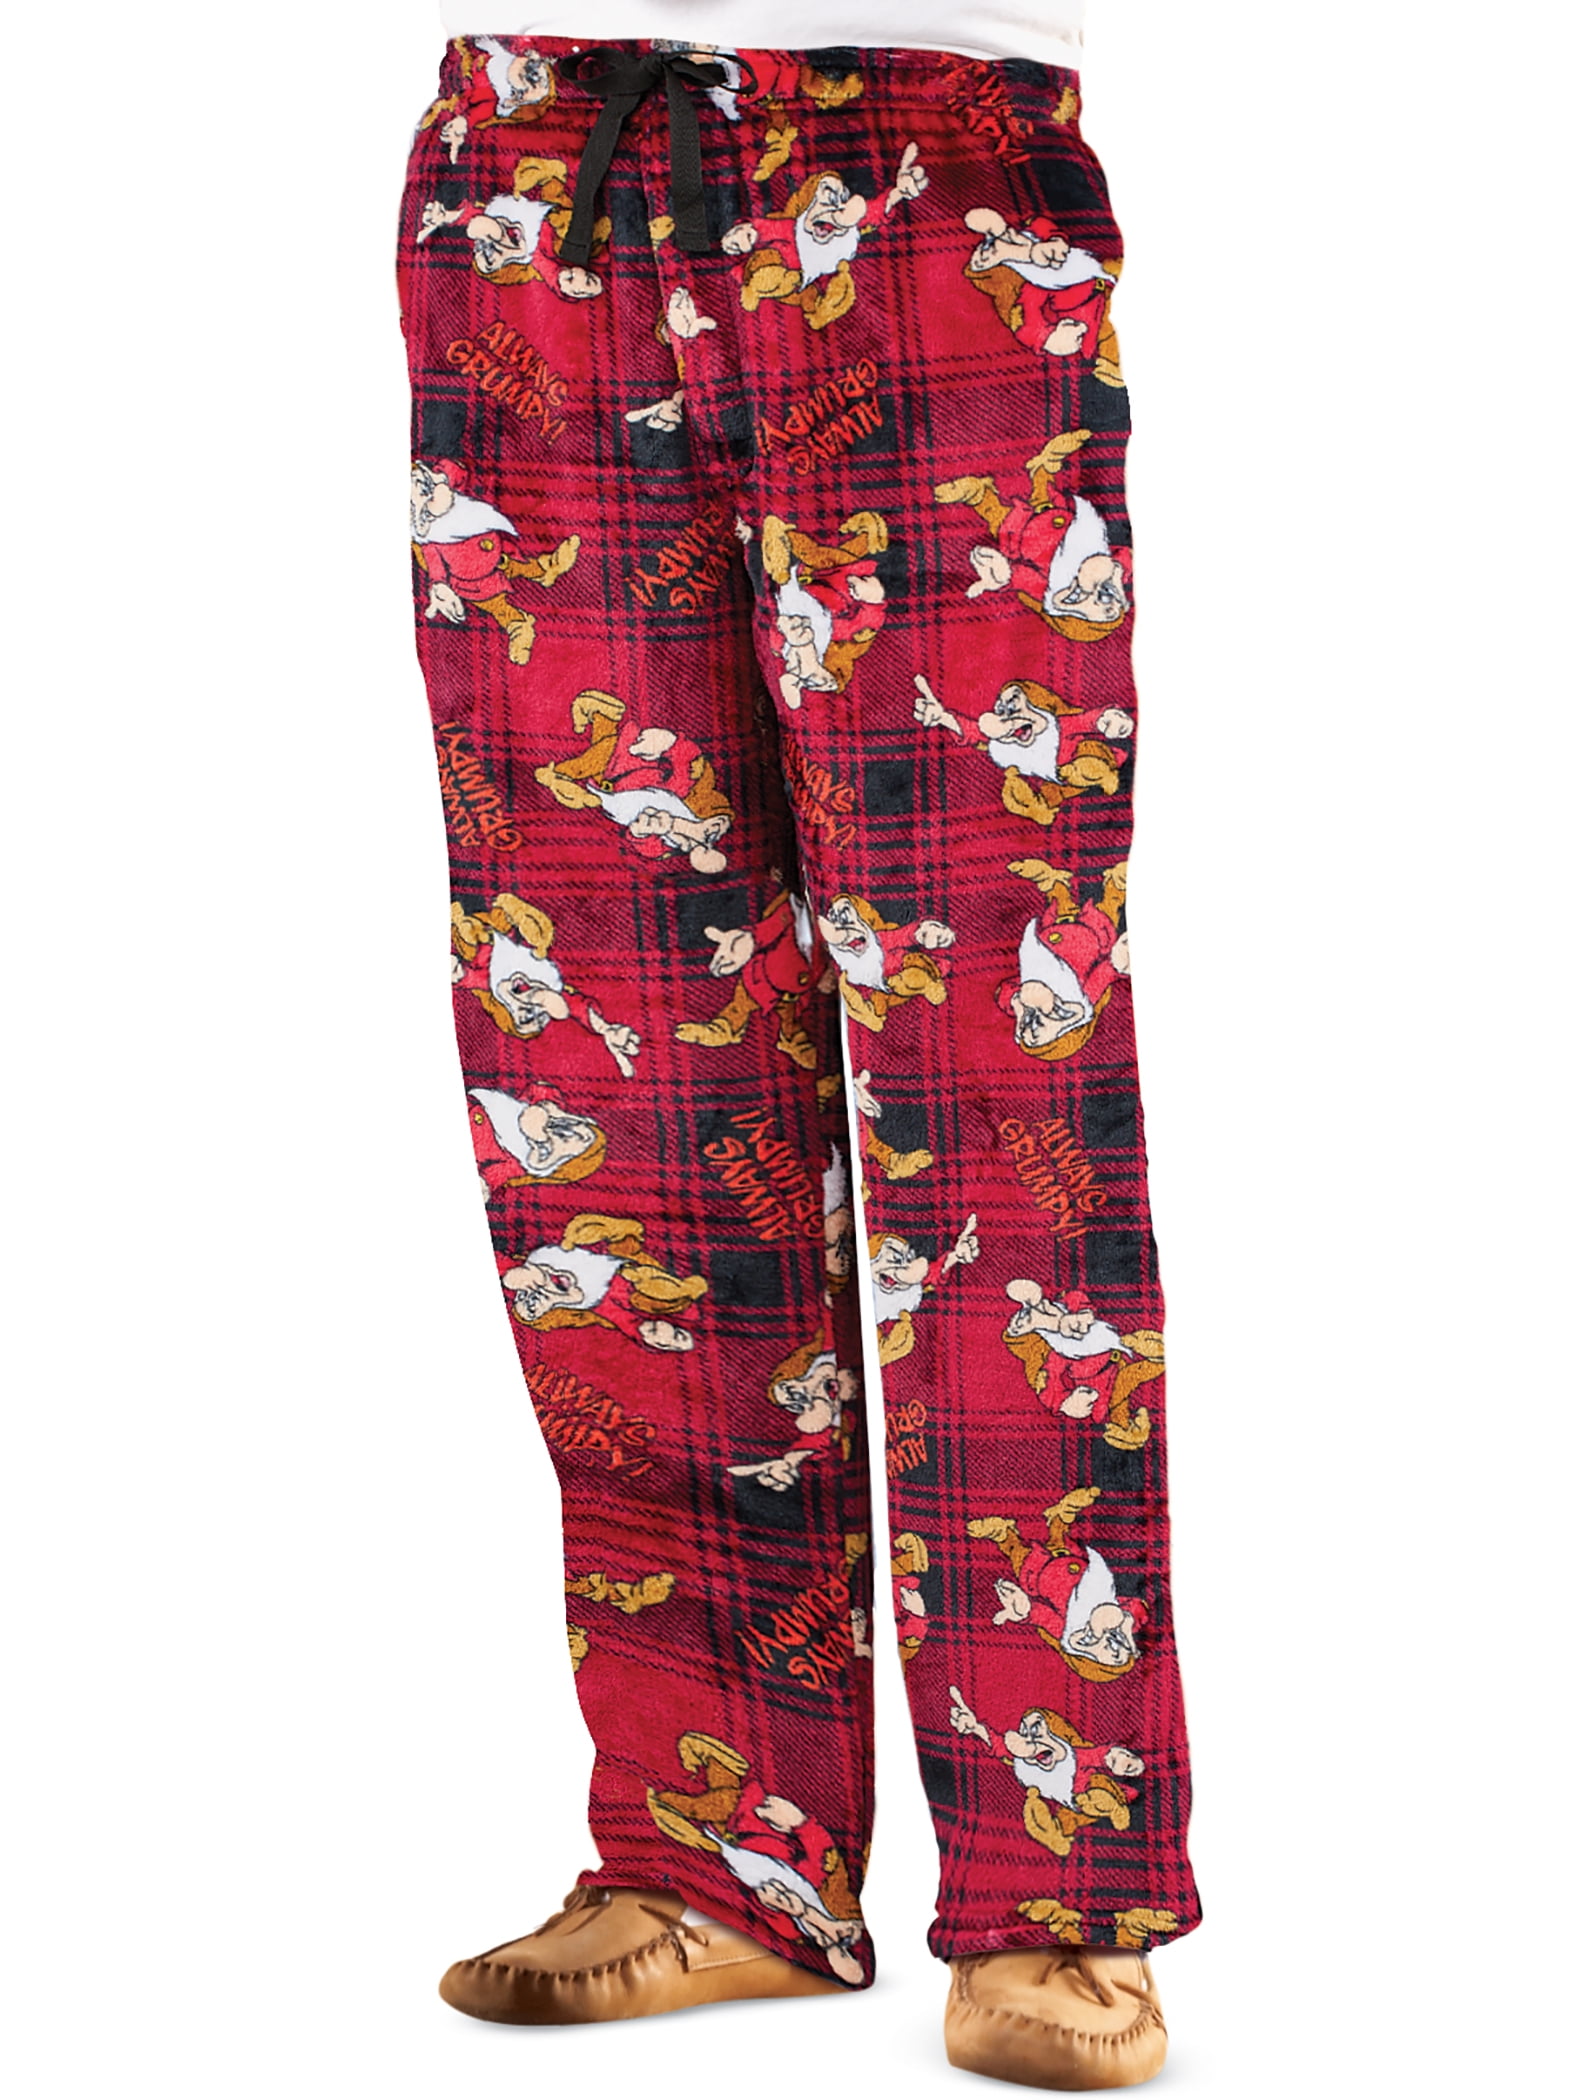 Men's Fruit Of The Loom Fleece Sleep Lounge Pants XL 40-42 Red Plaid NEW 